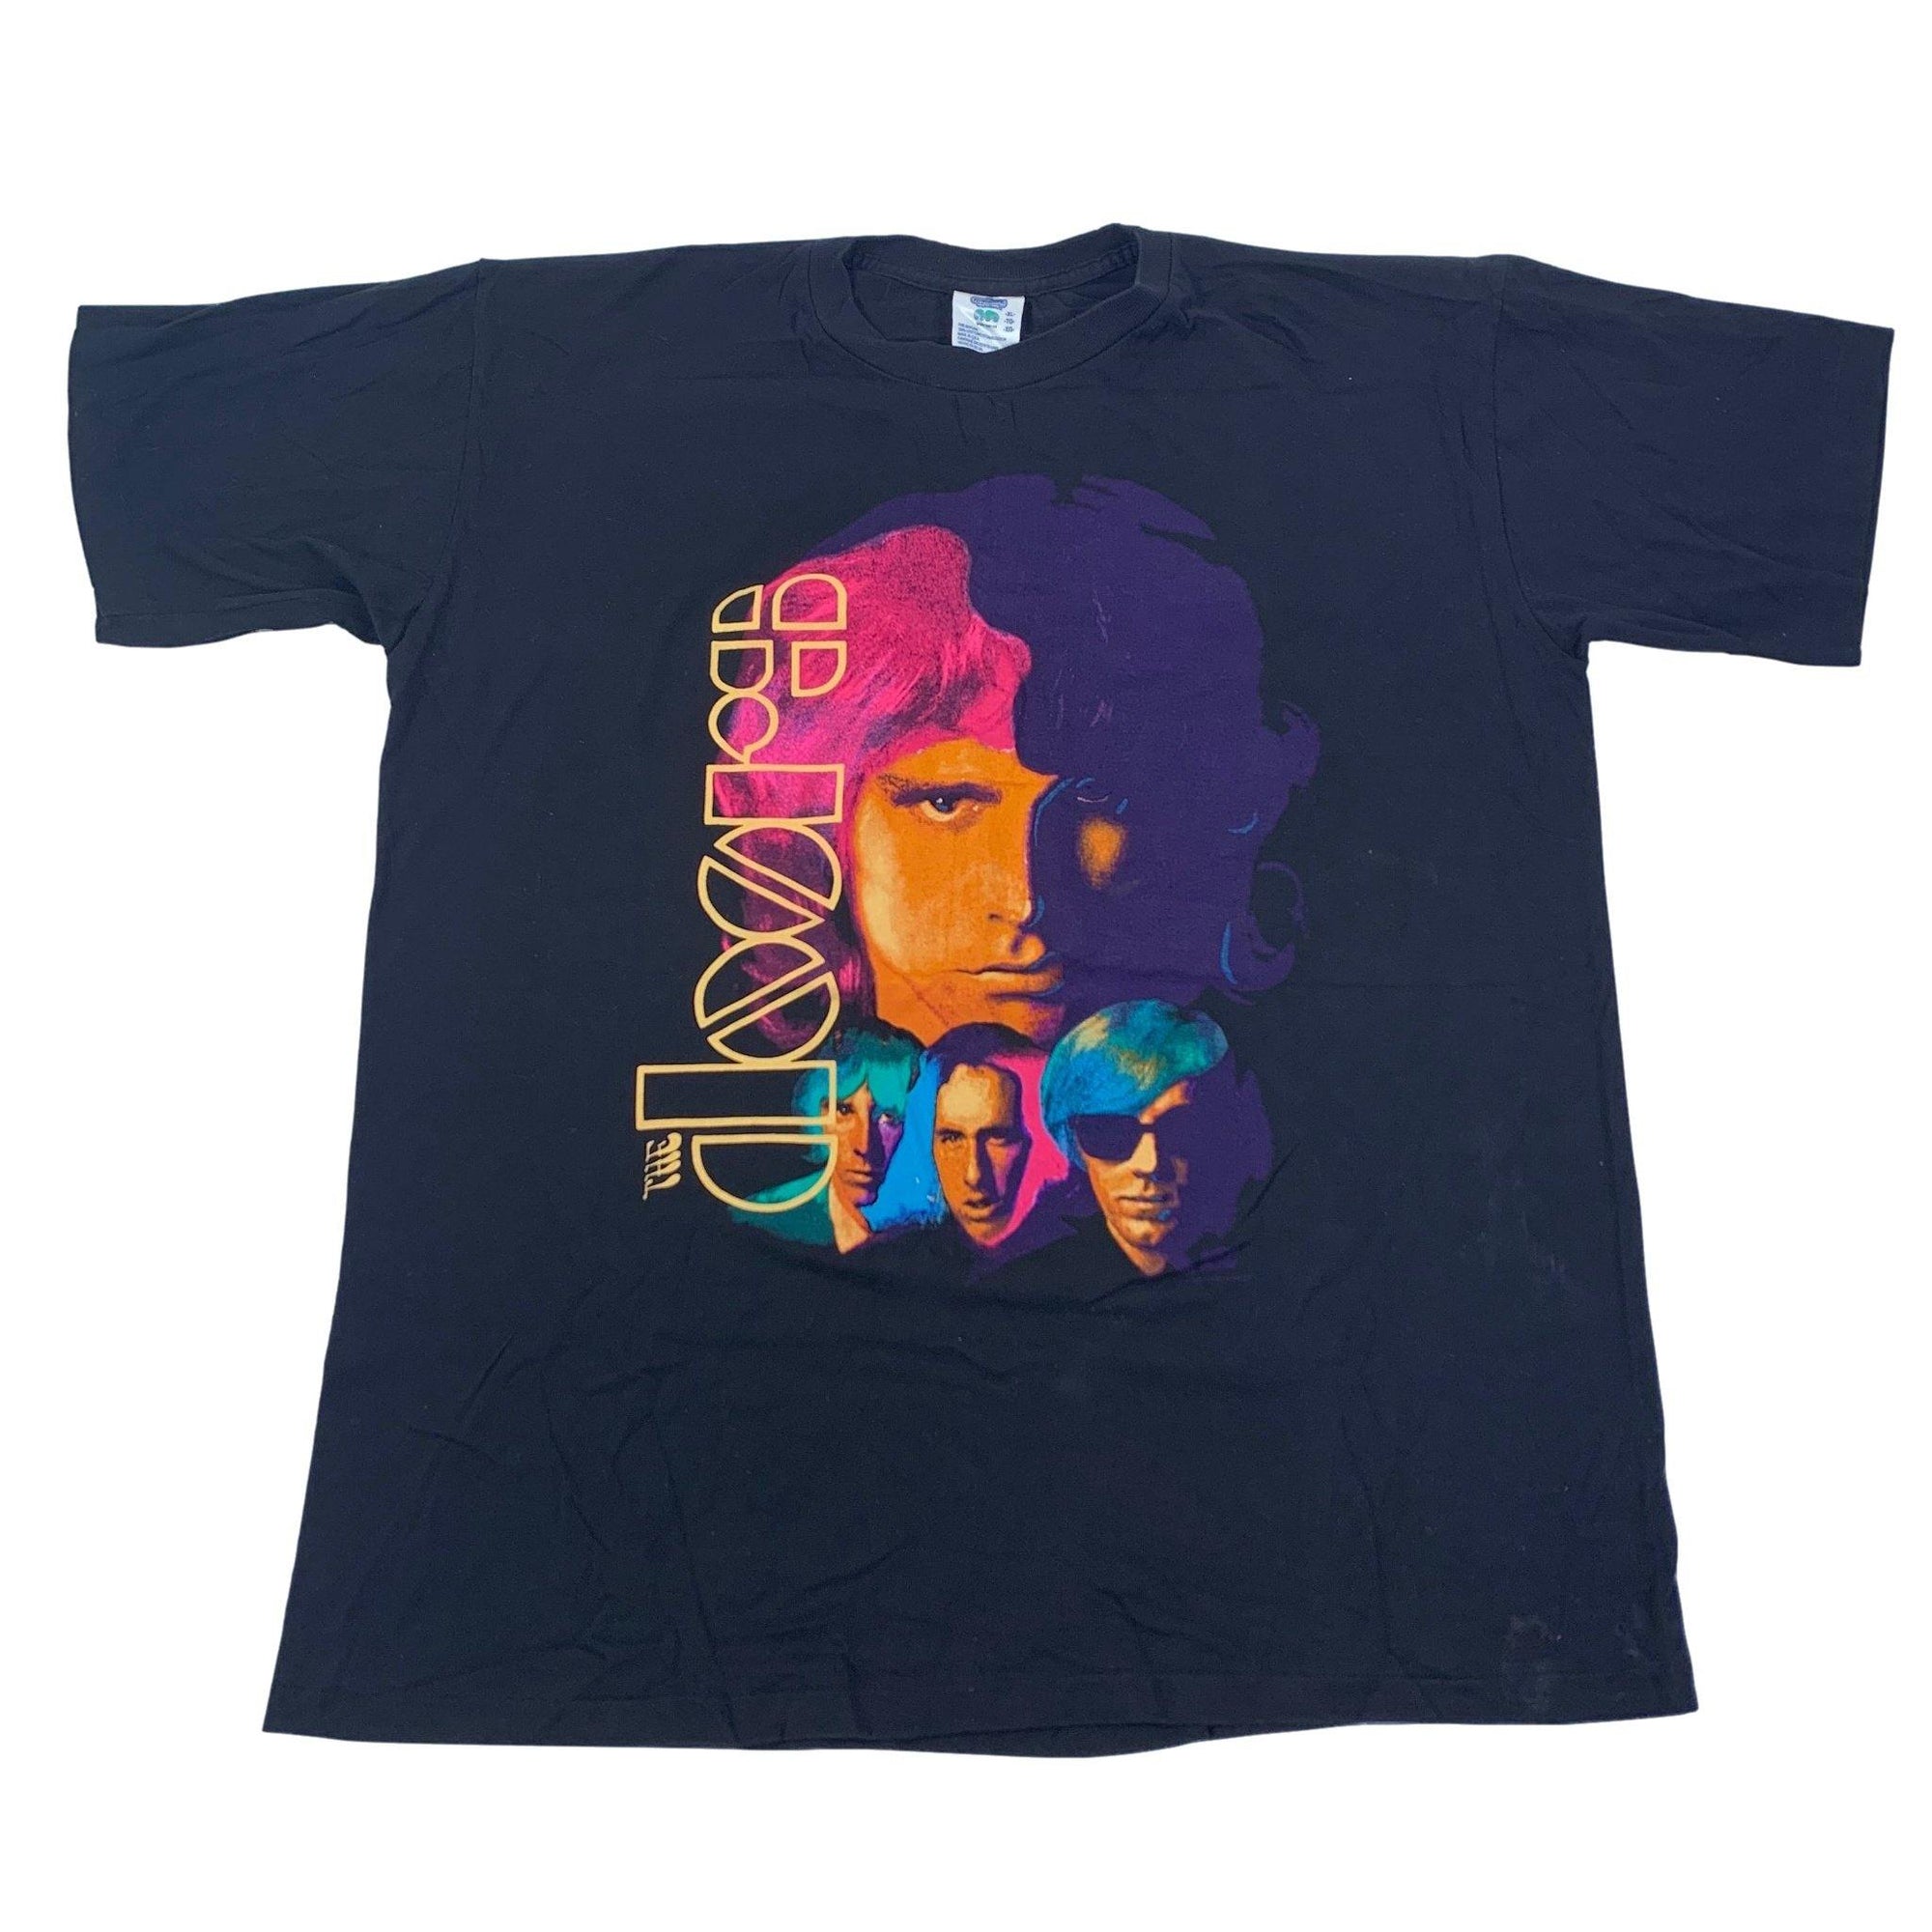 Vintage The Doors "Five To One" T-Shirt - jointcustodydc